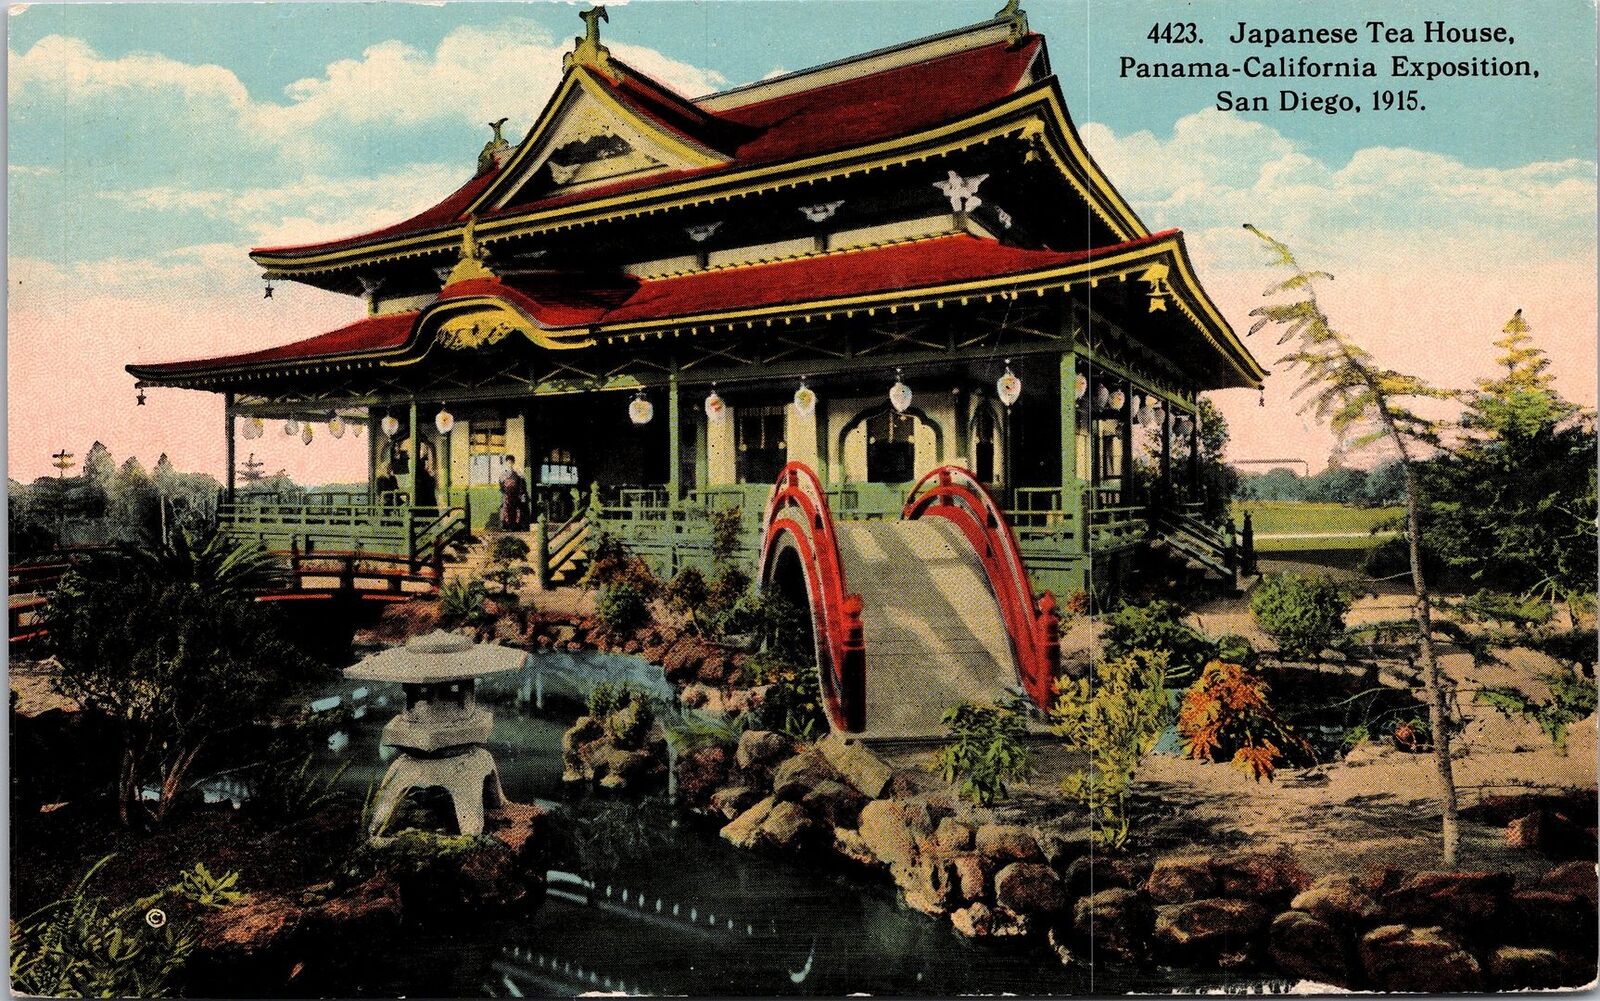 1915 Panama-California Exposition Japanese Tea House Postcard